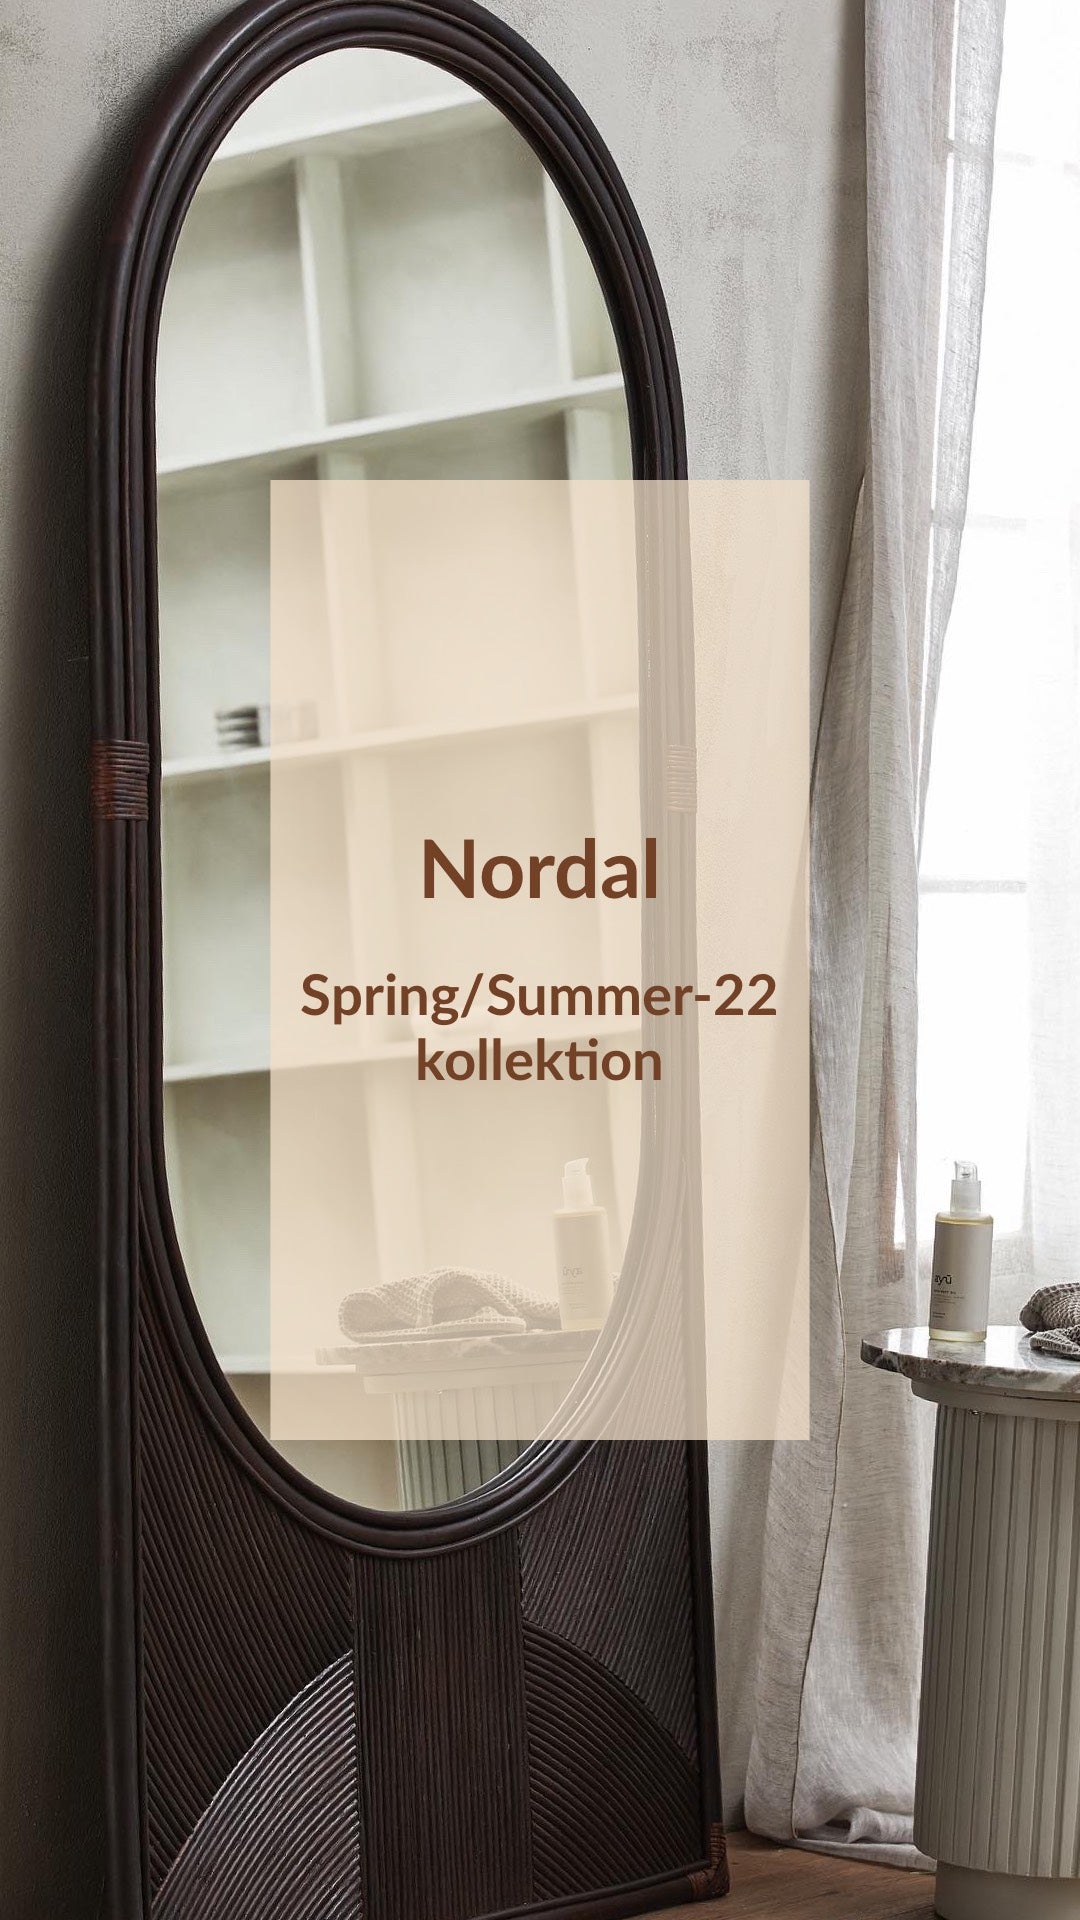 Nordal Spring/Summer-22 kollektion